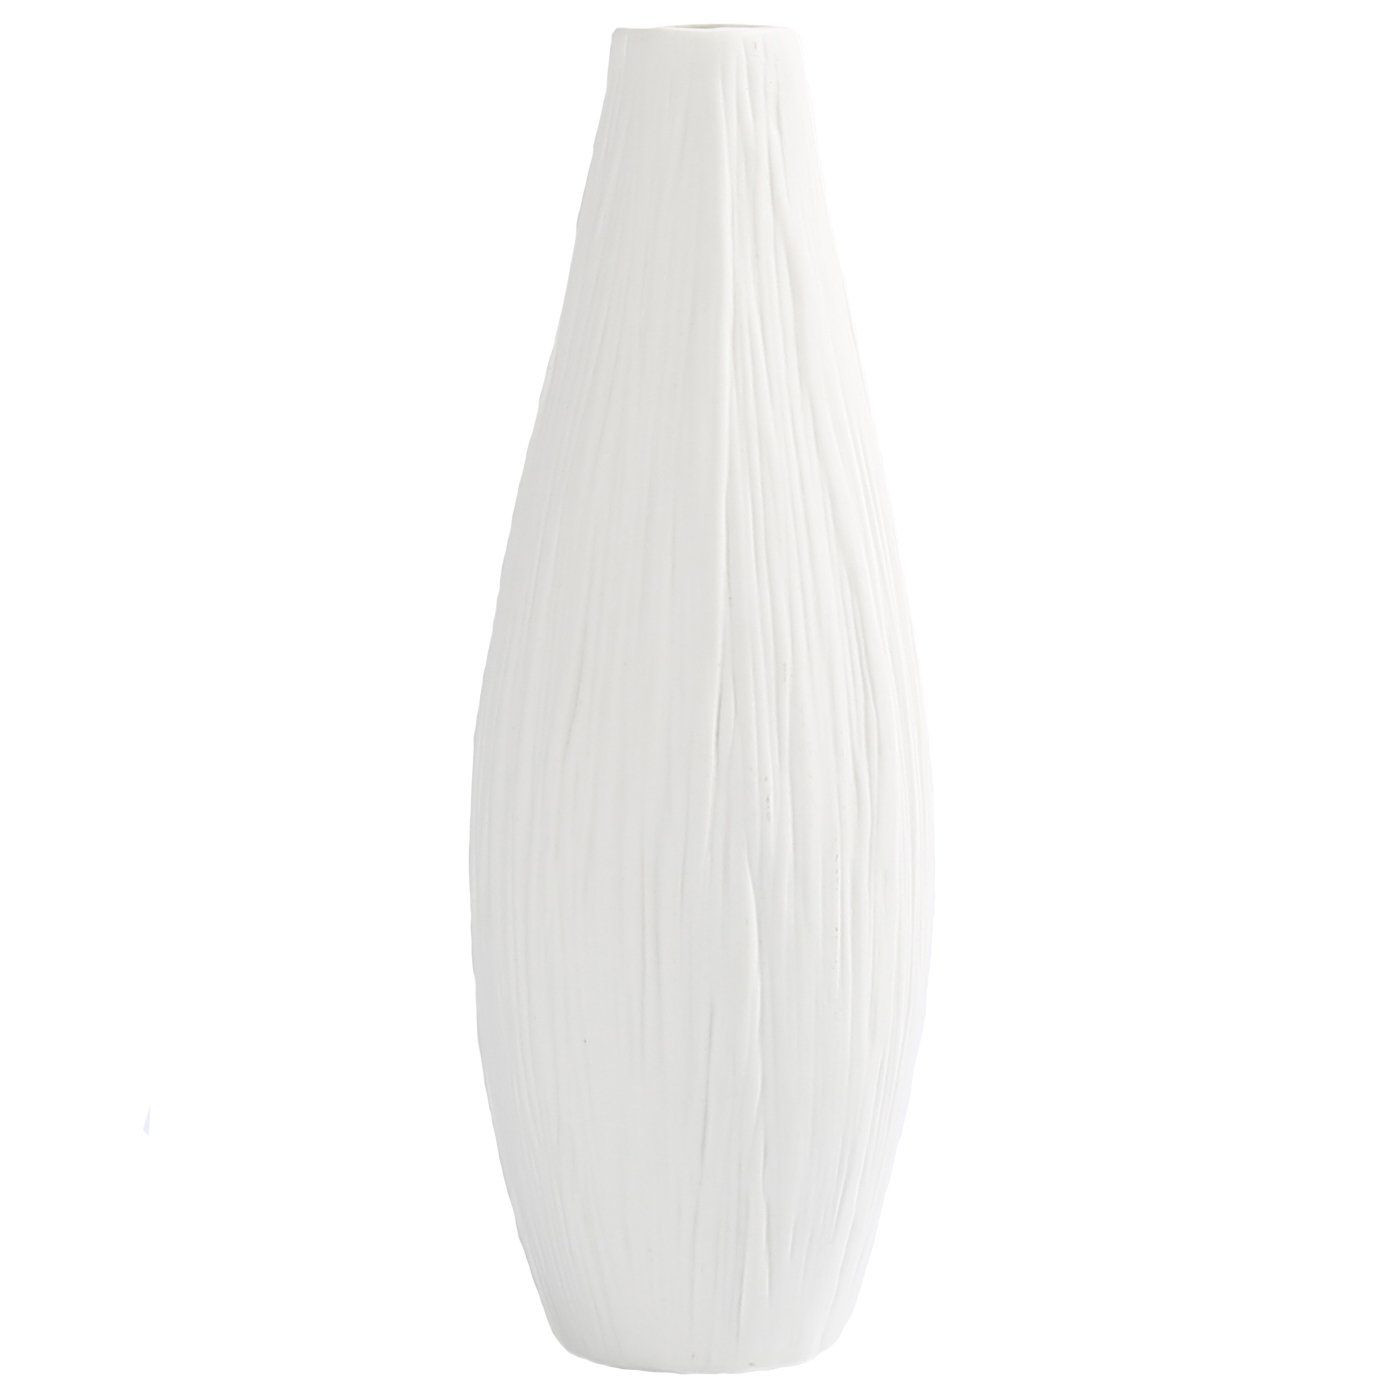 16 Cute Set Of 3 White Vases 2024 free download set of 3 white vases of dvine dev 10 pure white ceramic flower vase tall oval inside dvine dev 10 pure white ceramic flower vase tall oval